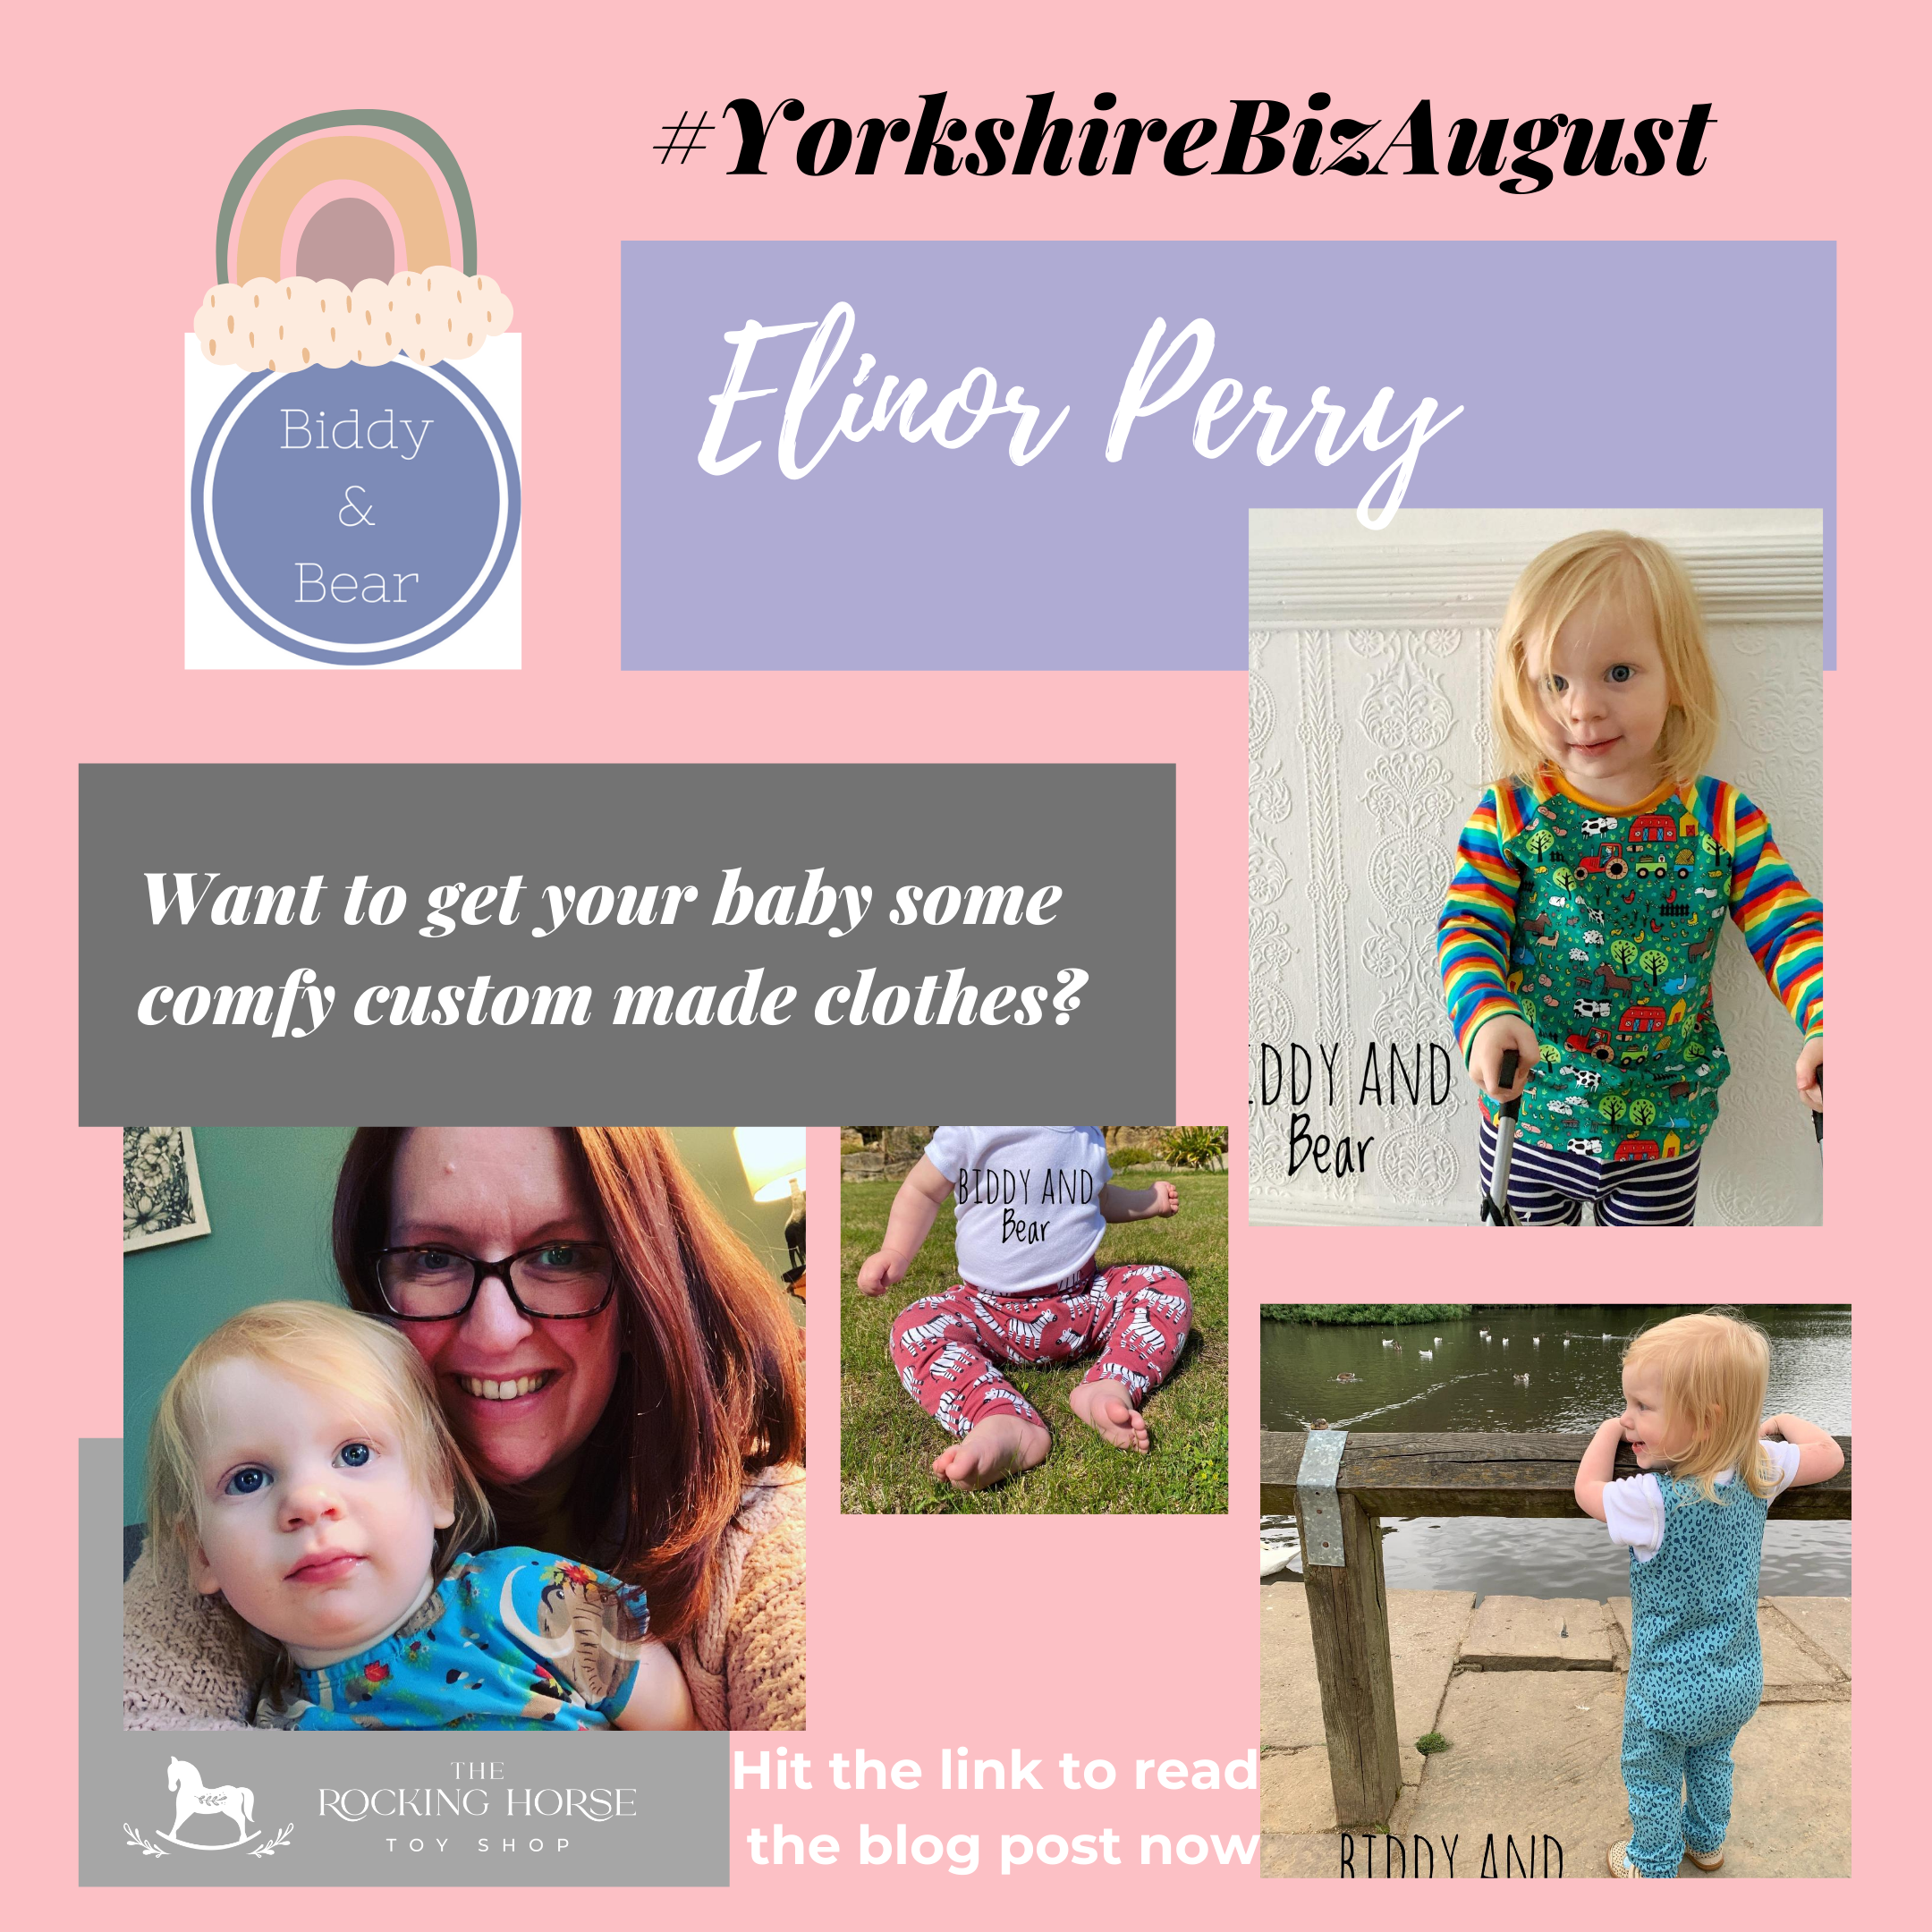 Yorkshire Biz August 15 - Elinor Perry - Biddy and Bear